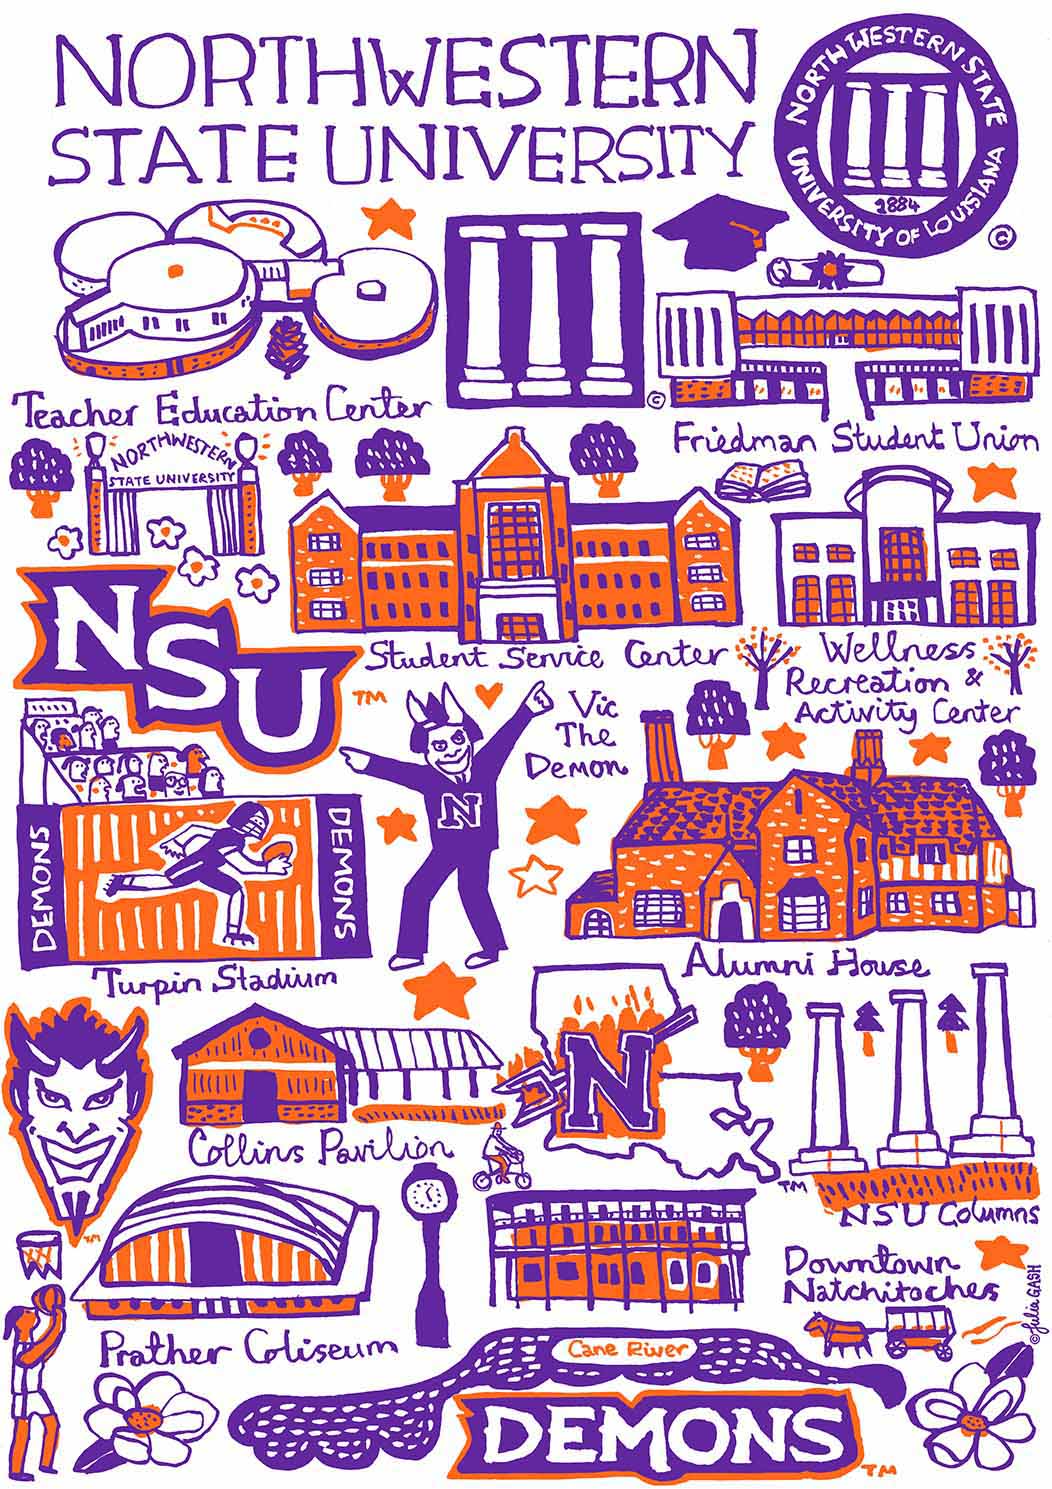 Northwestern State University Design by Julia Gash